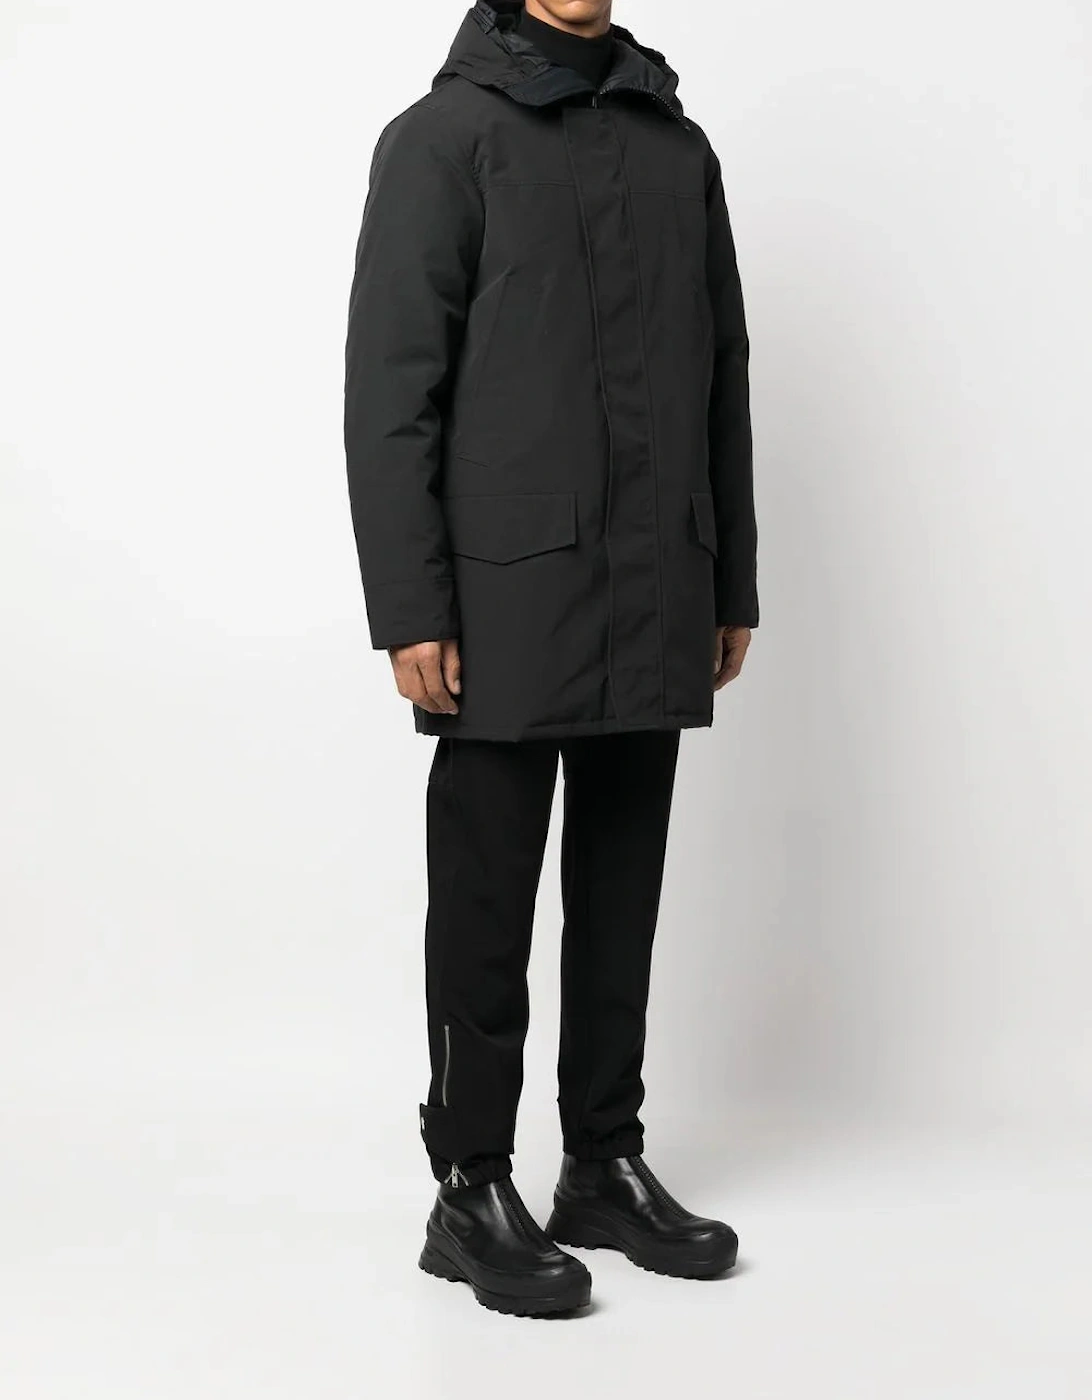 Langford Parka Coat in Black